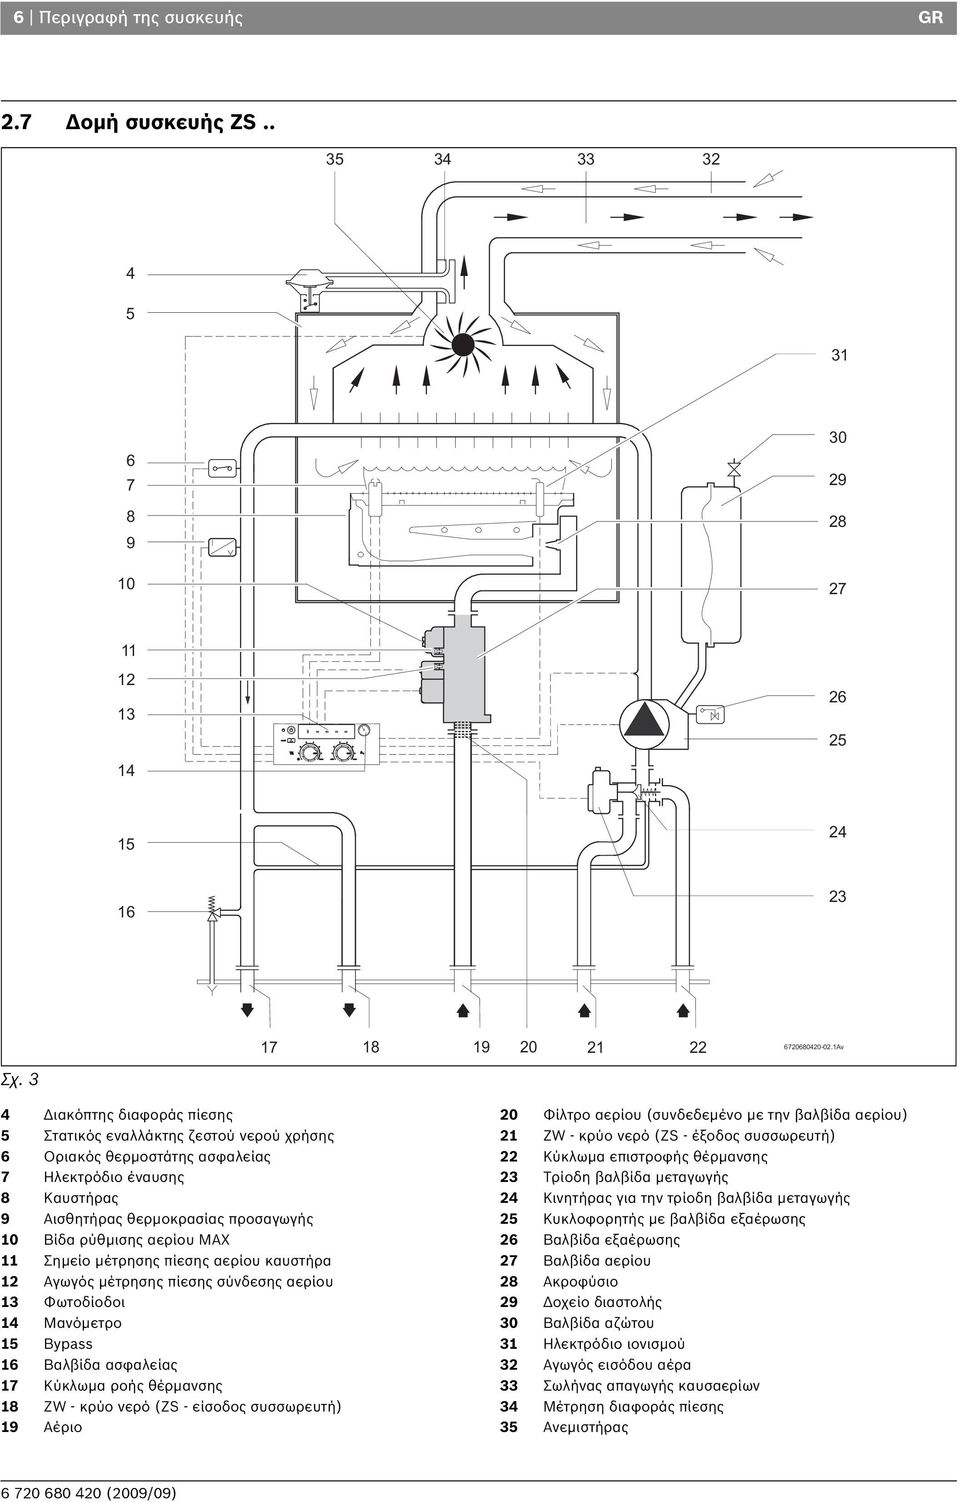 MAX 11 Σημείο μέτρησης πίεσης αερίου καυστήρα 12 Αγωγός μέτρησης πίεσης σύνδεσης αερίου 13 Φωτοδίοδοι 14 Μανόμετρο 15 Bypass 16 Βαλβίδα ασφαλείας 17 Κύκλωμα ροής θέρμανσης 18 ZW - κρύο νερό (ZS -